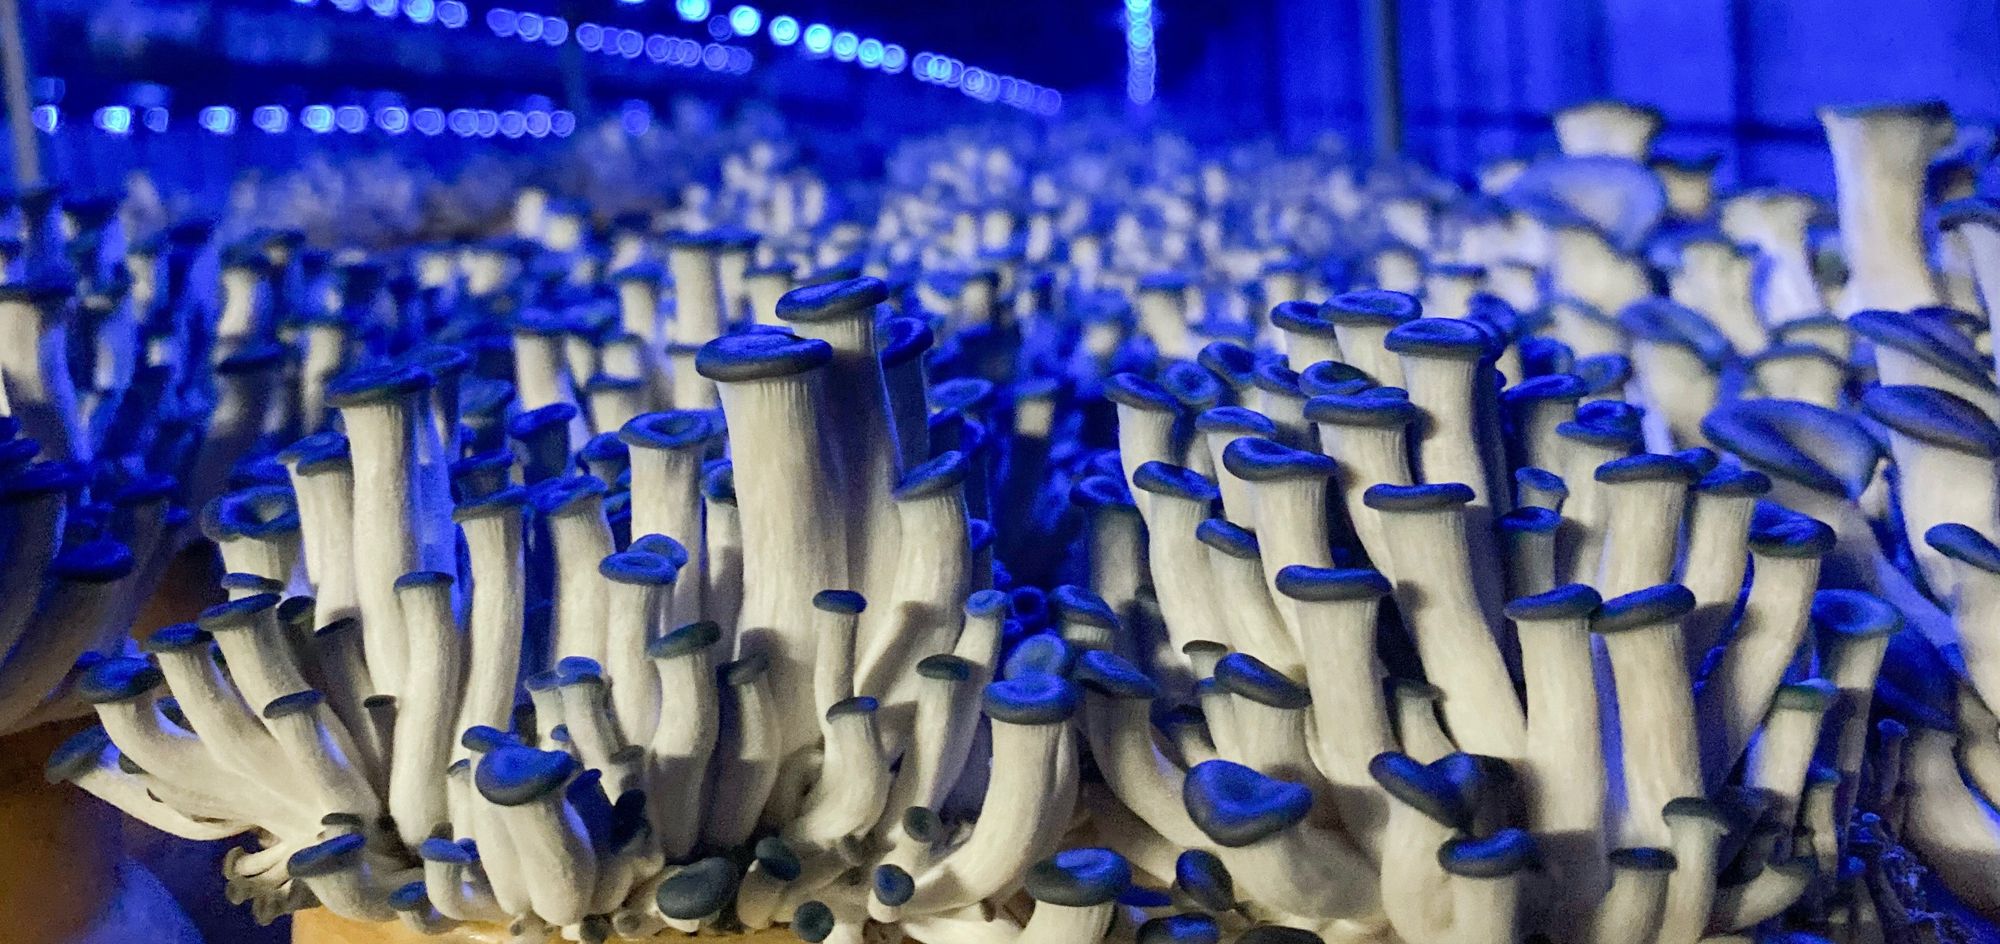 Hedgehog - Robotic mushroom farms